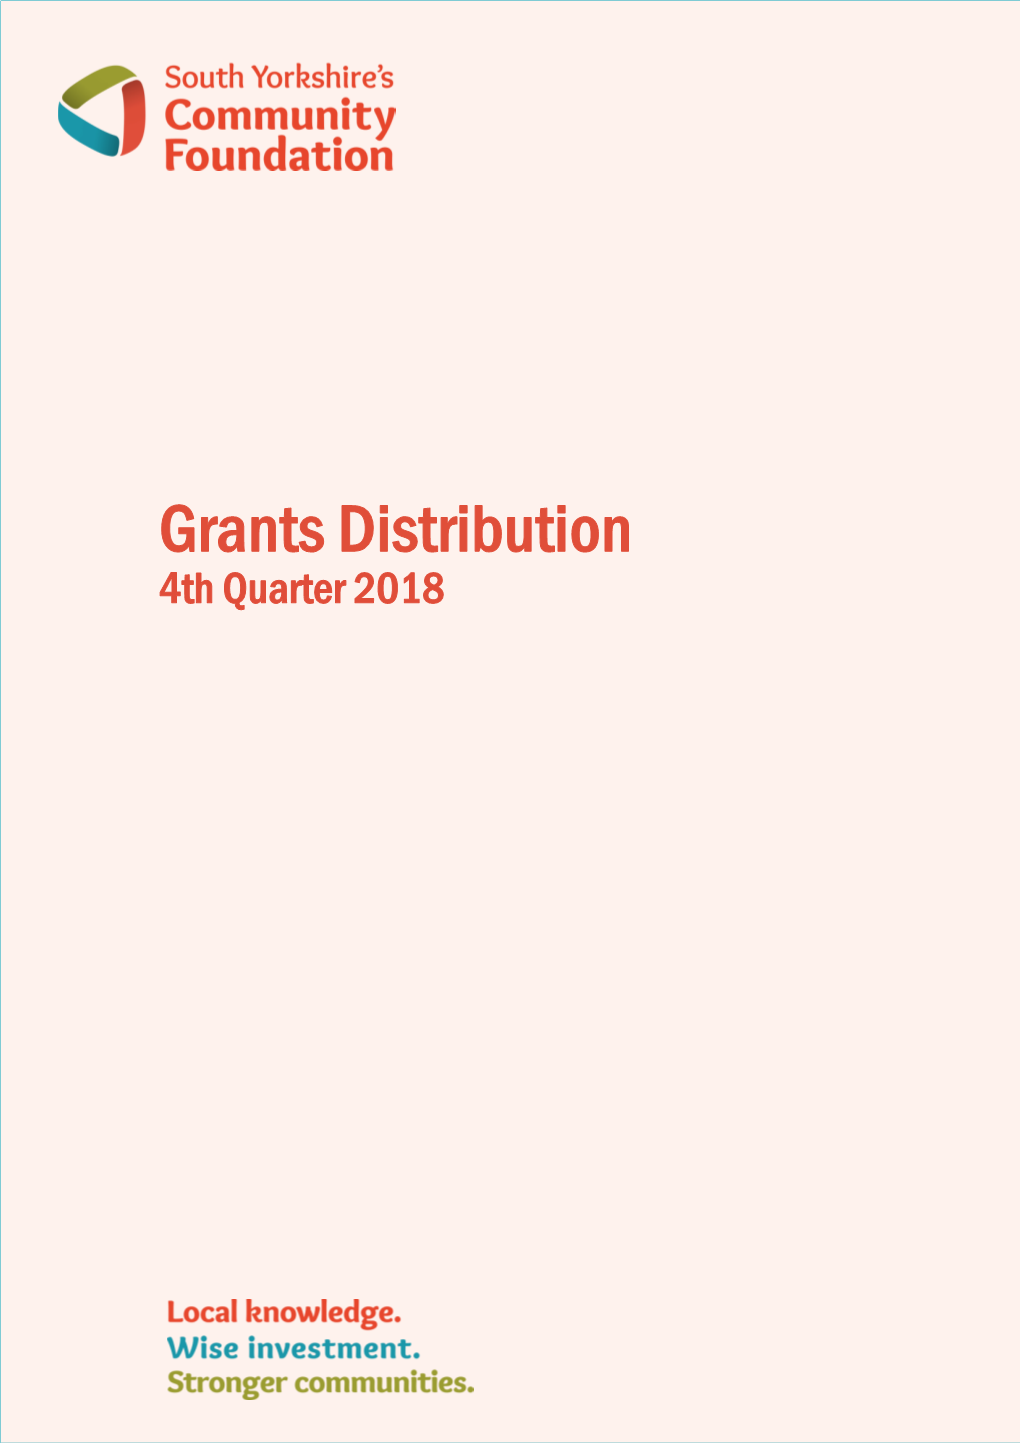 Grants Awarded 4Th Quarter 2018